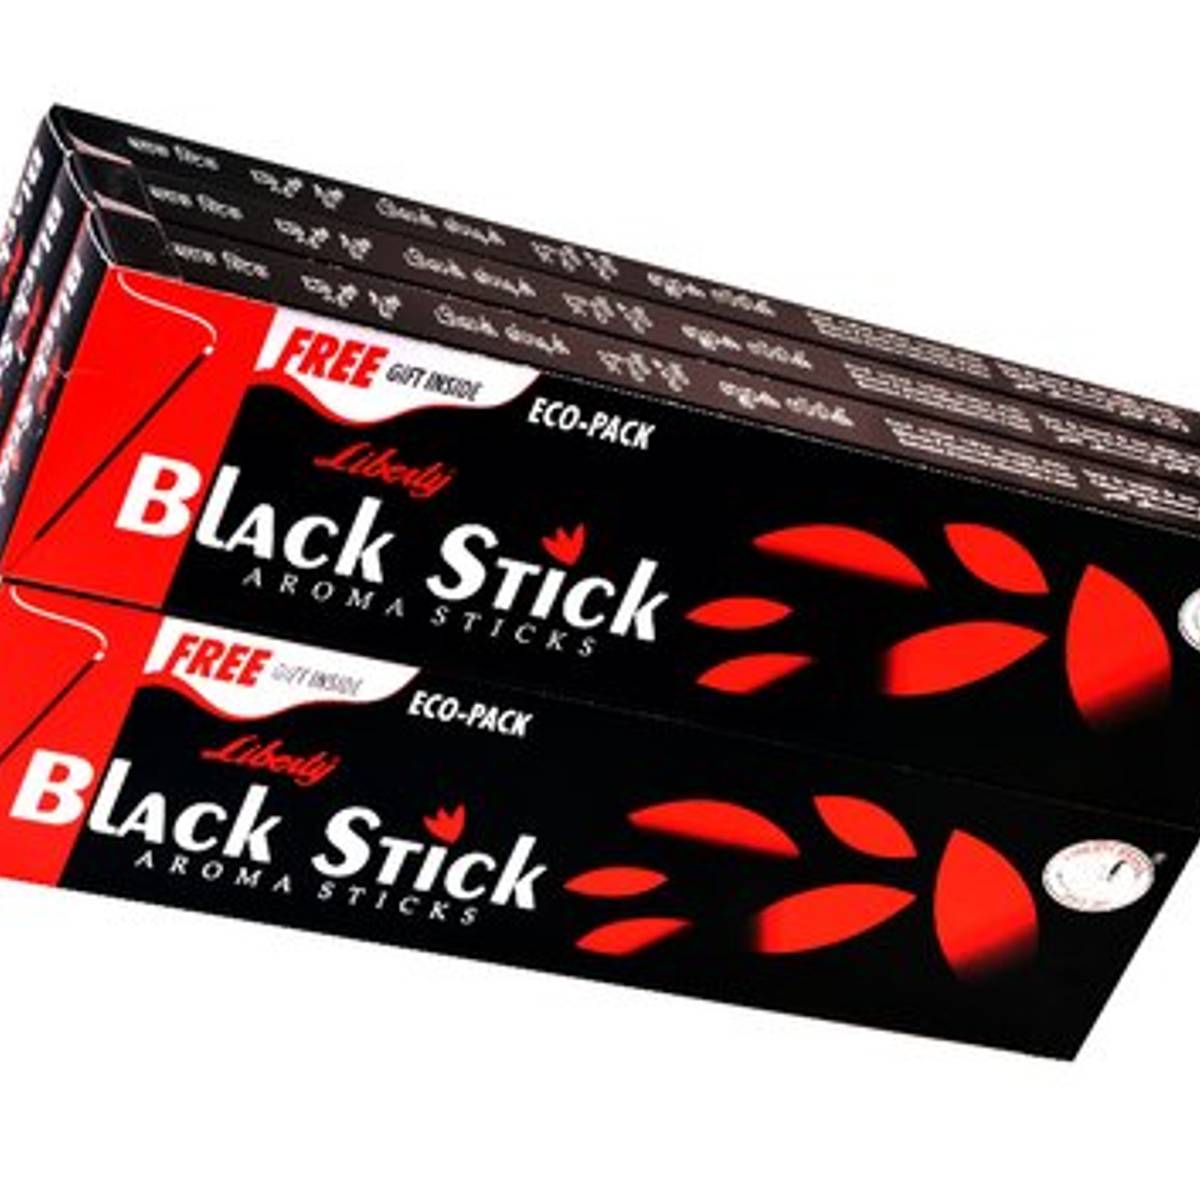 Black stick Eco Rs 50